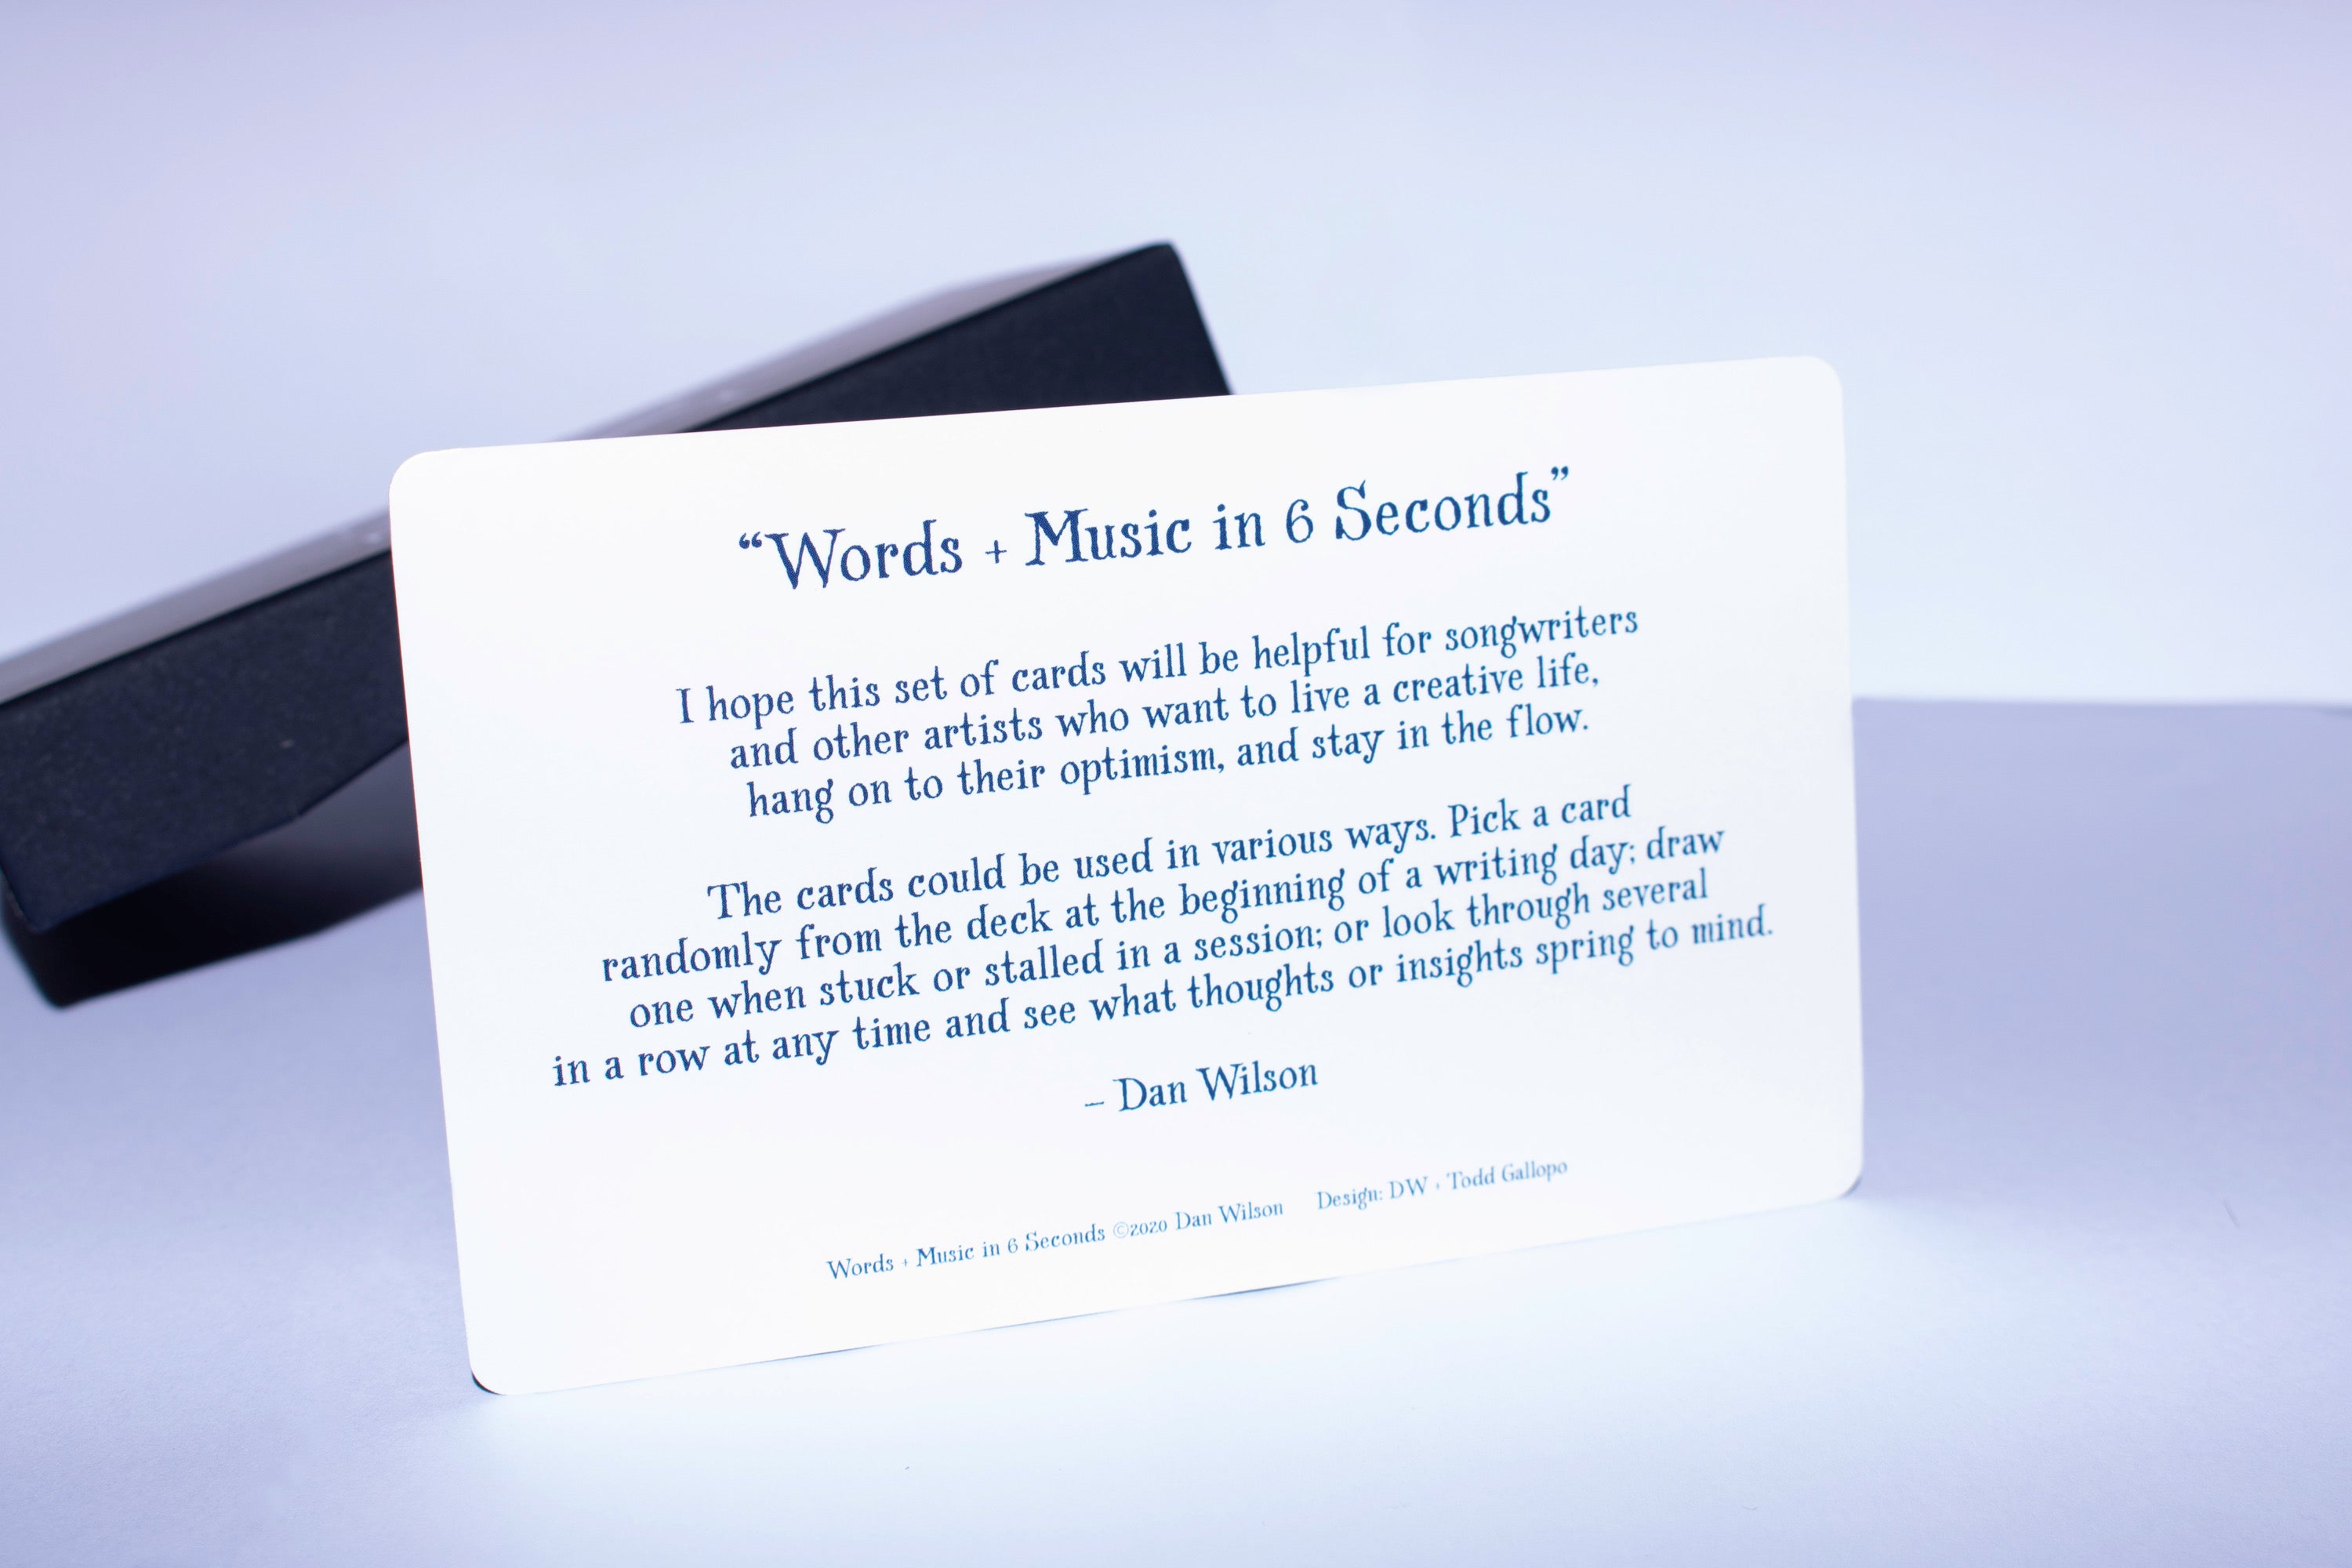 Words + Music In 6 Seconds by Dan Wilson - Spoken Word Edition